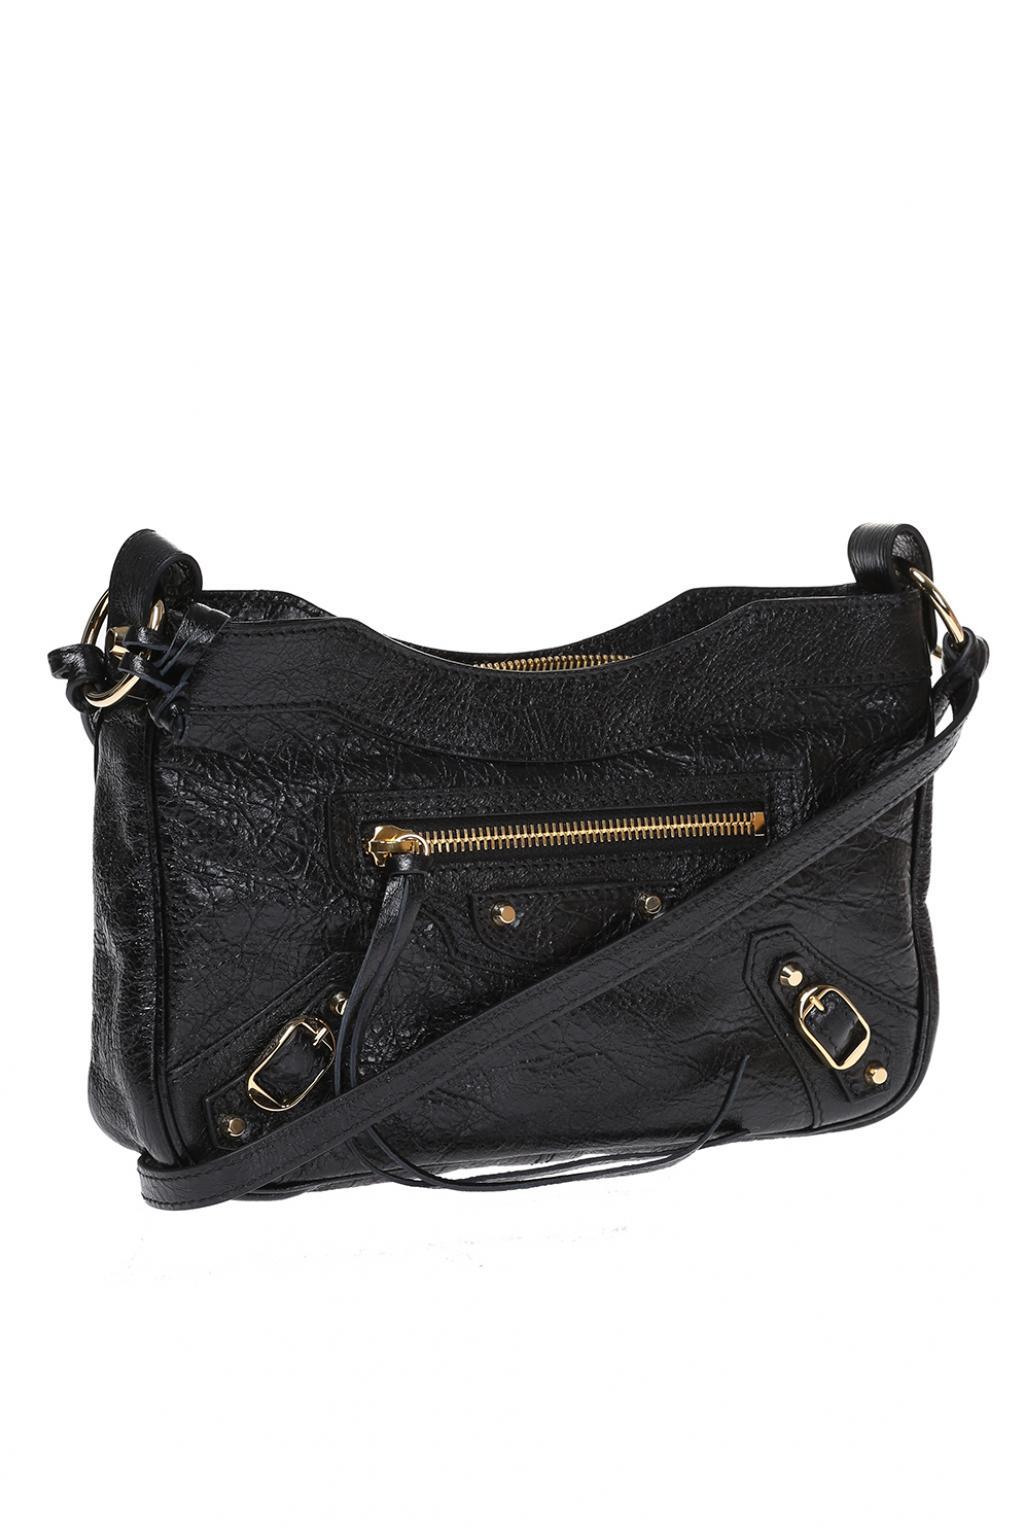 Balenciaga Leather 'hip' Shoulder Bag in Black - Lyst